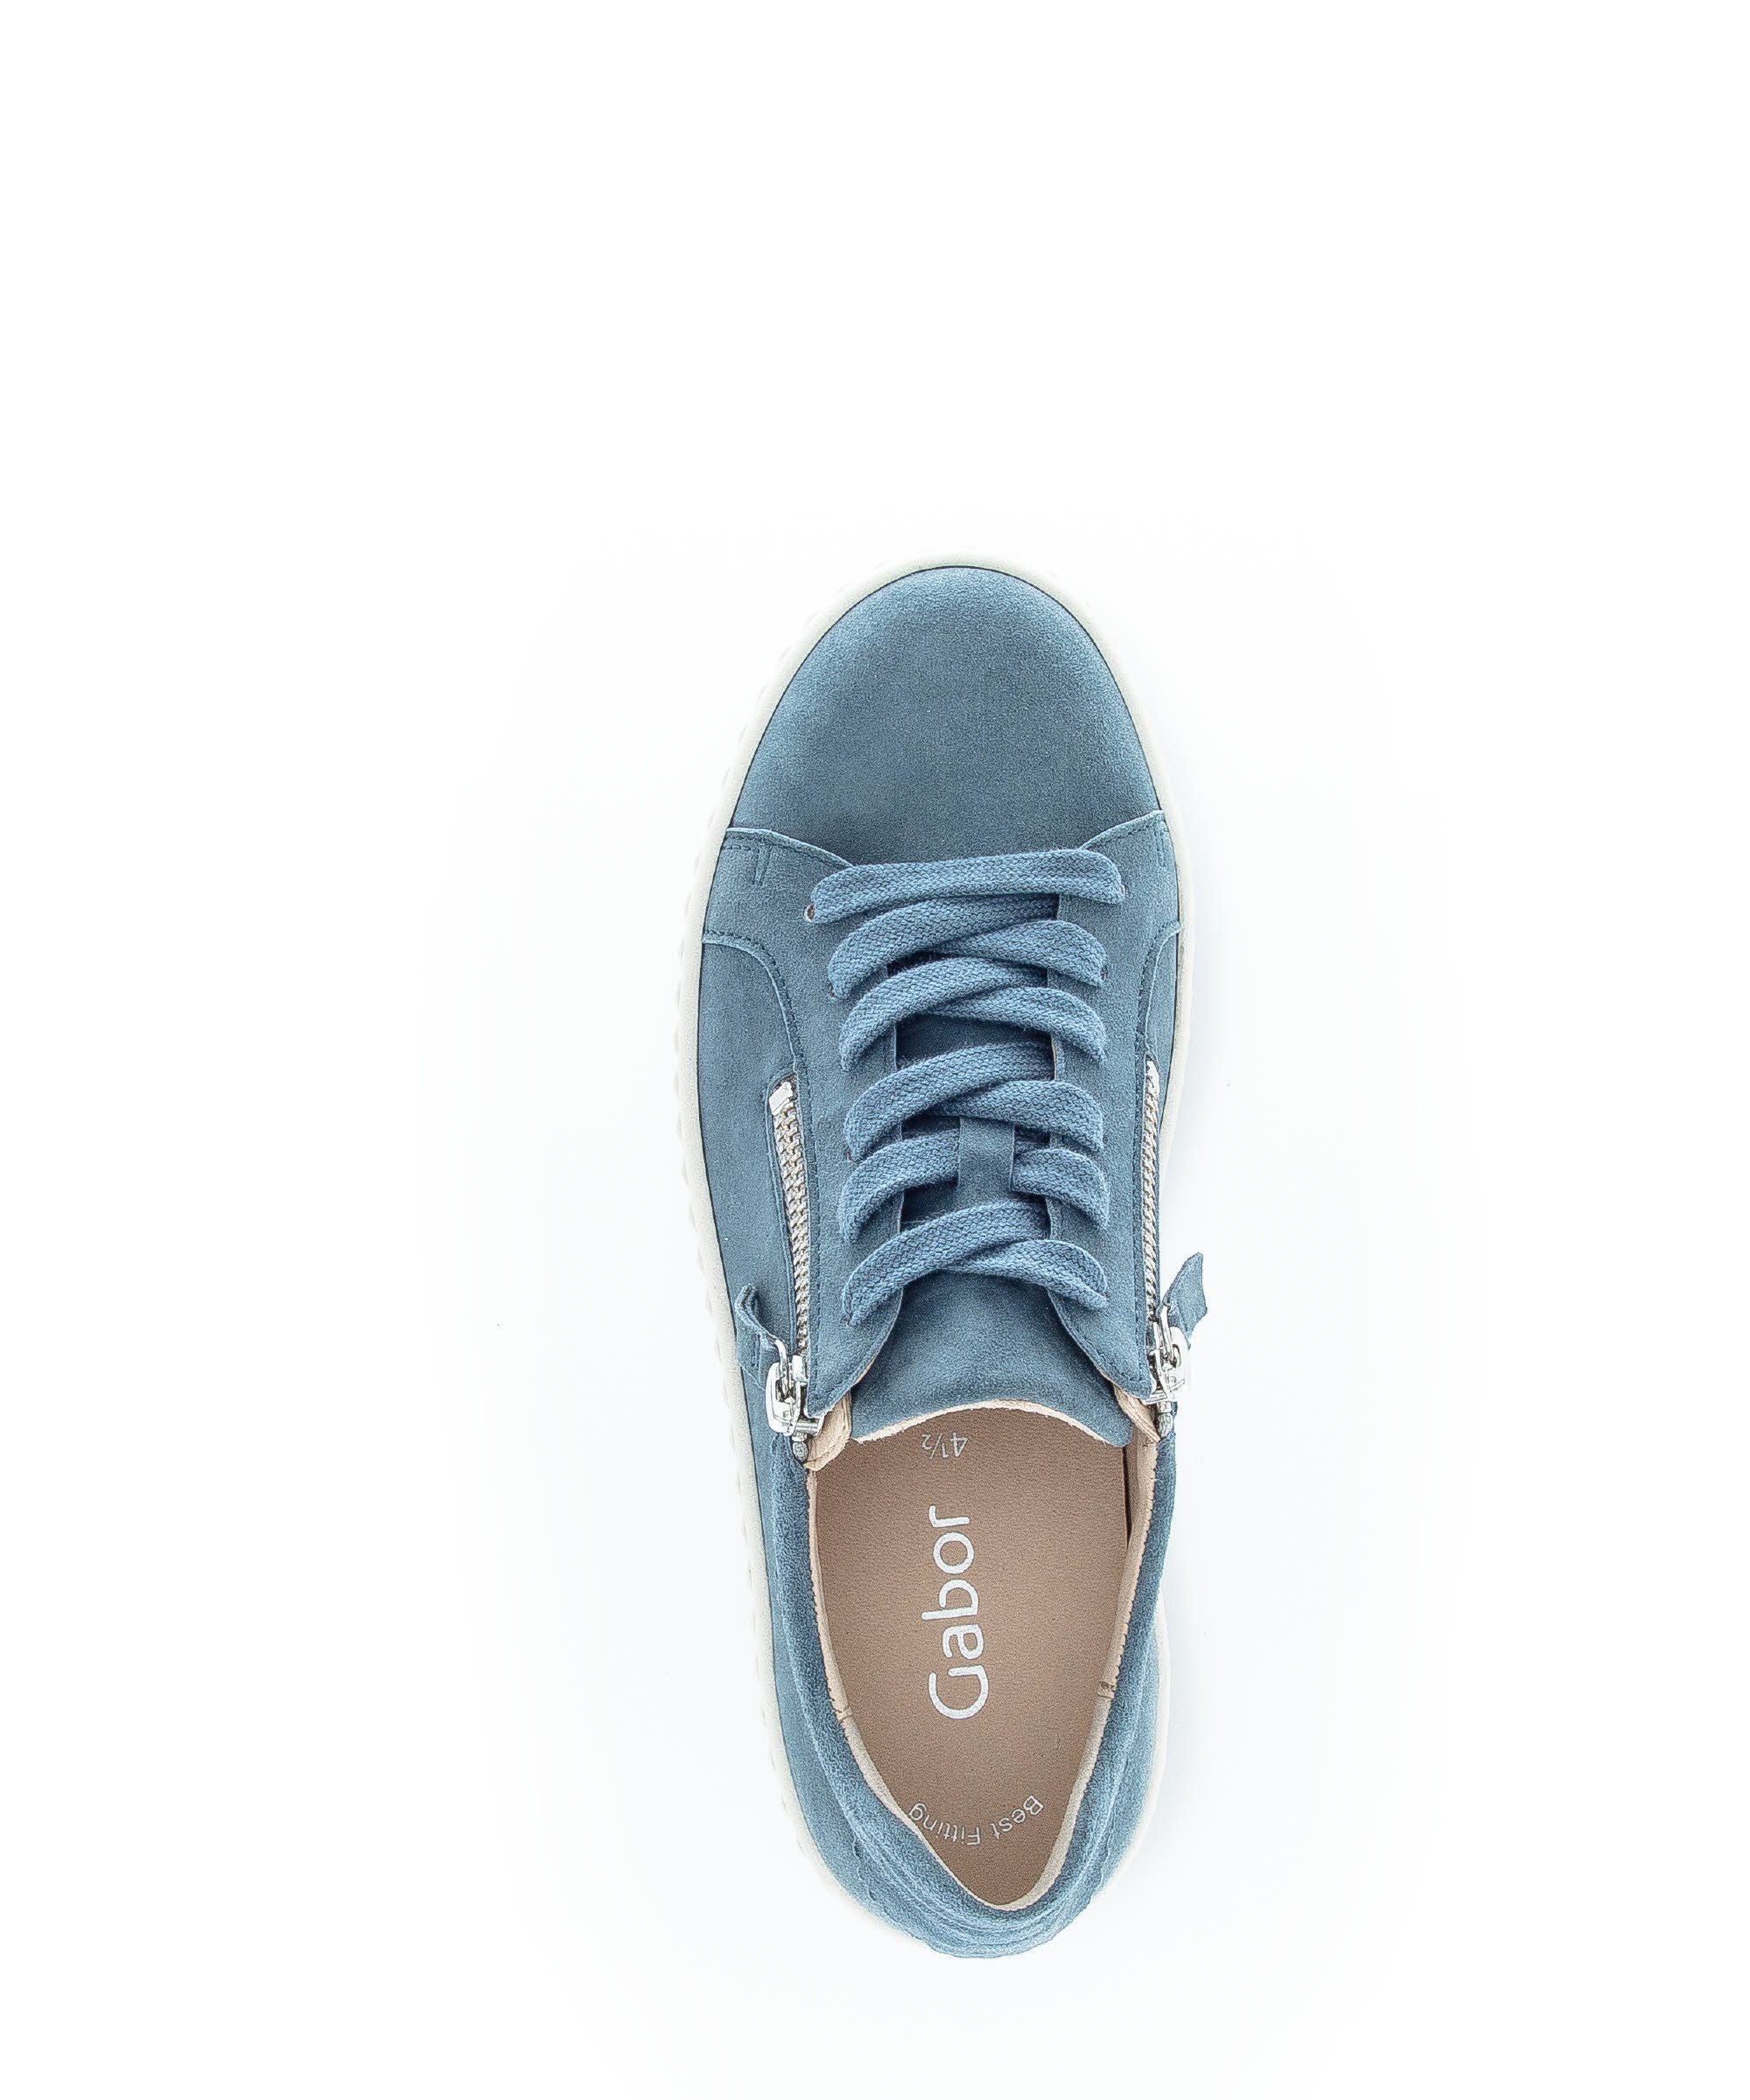 93.200.16 / Blau Sneaker 16) (denim Gabor